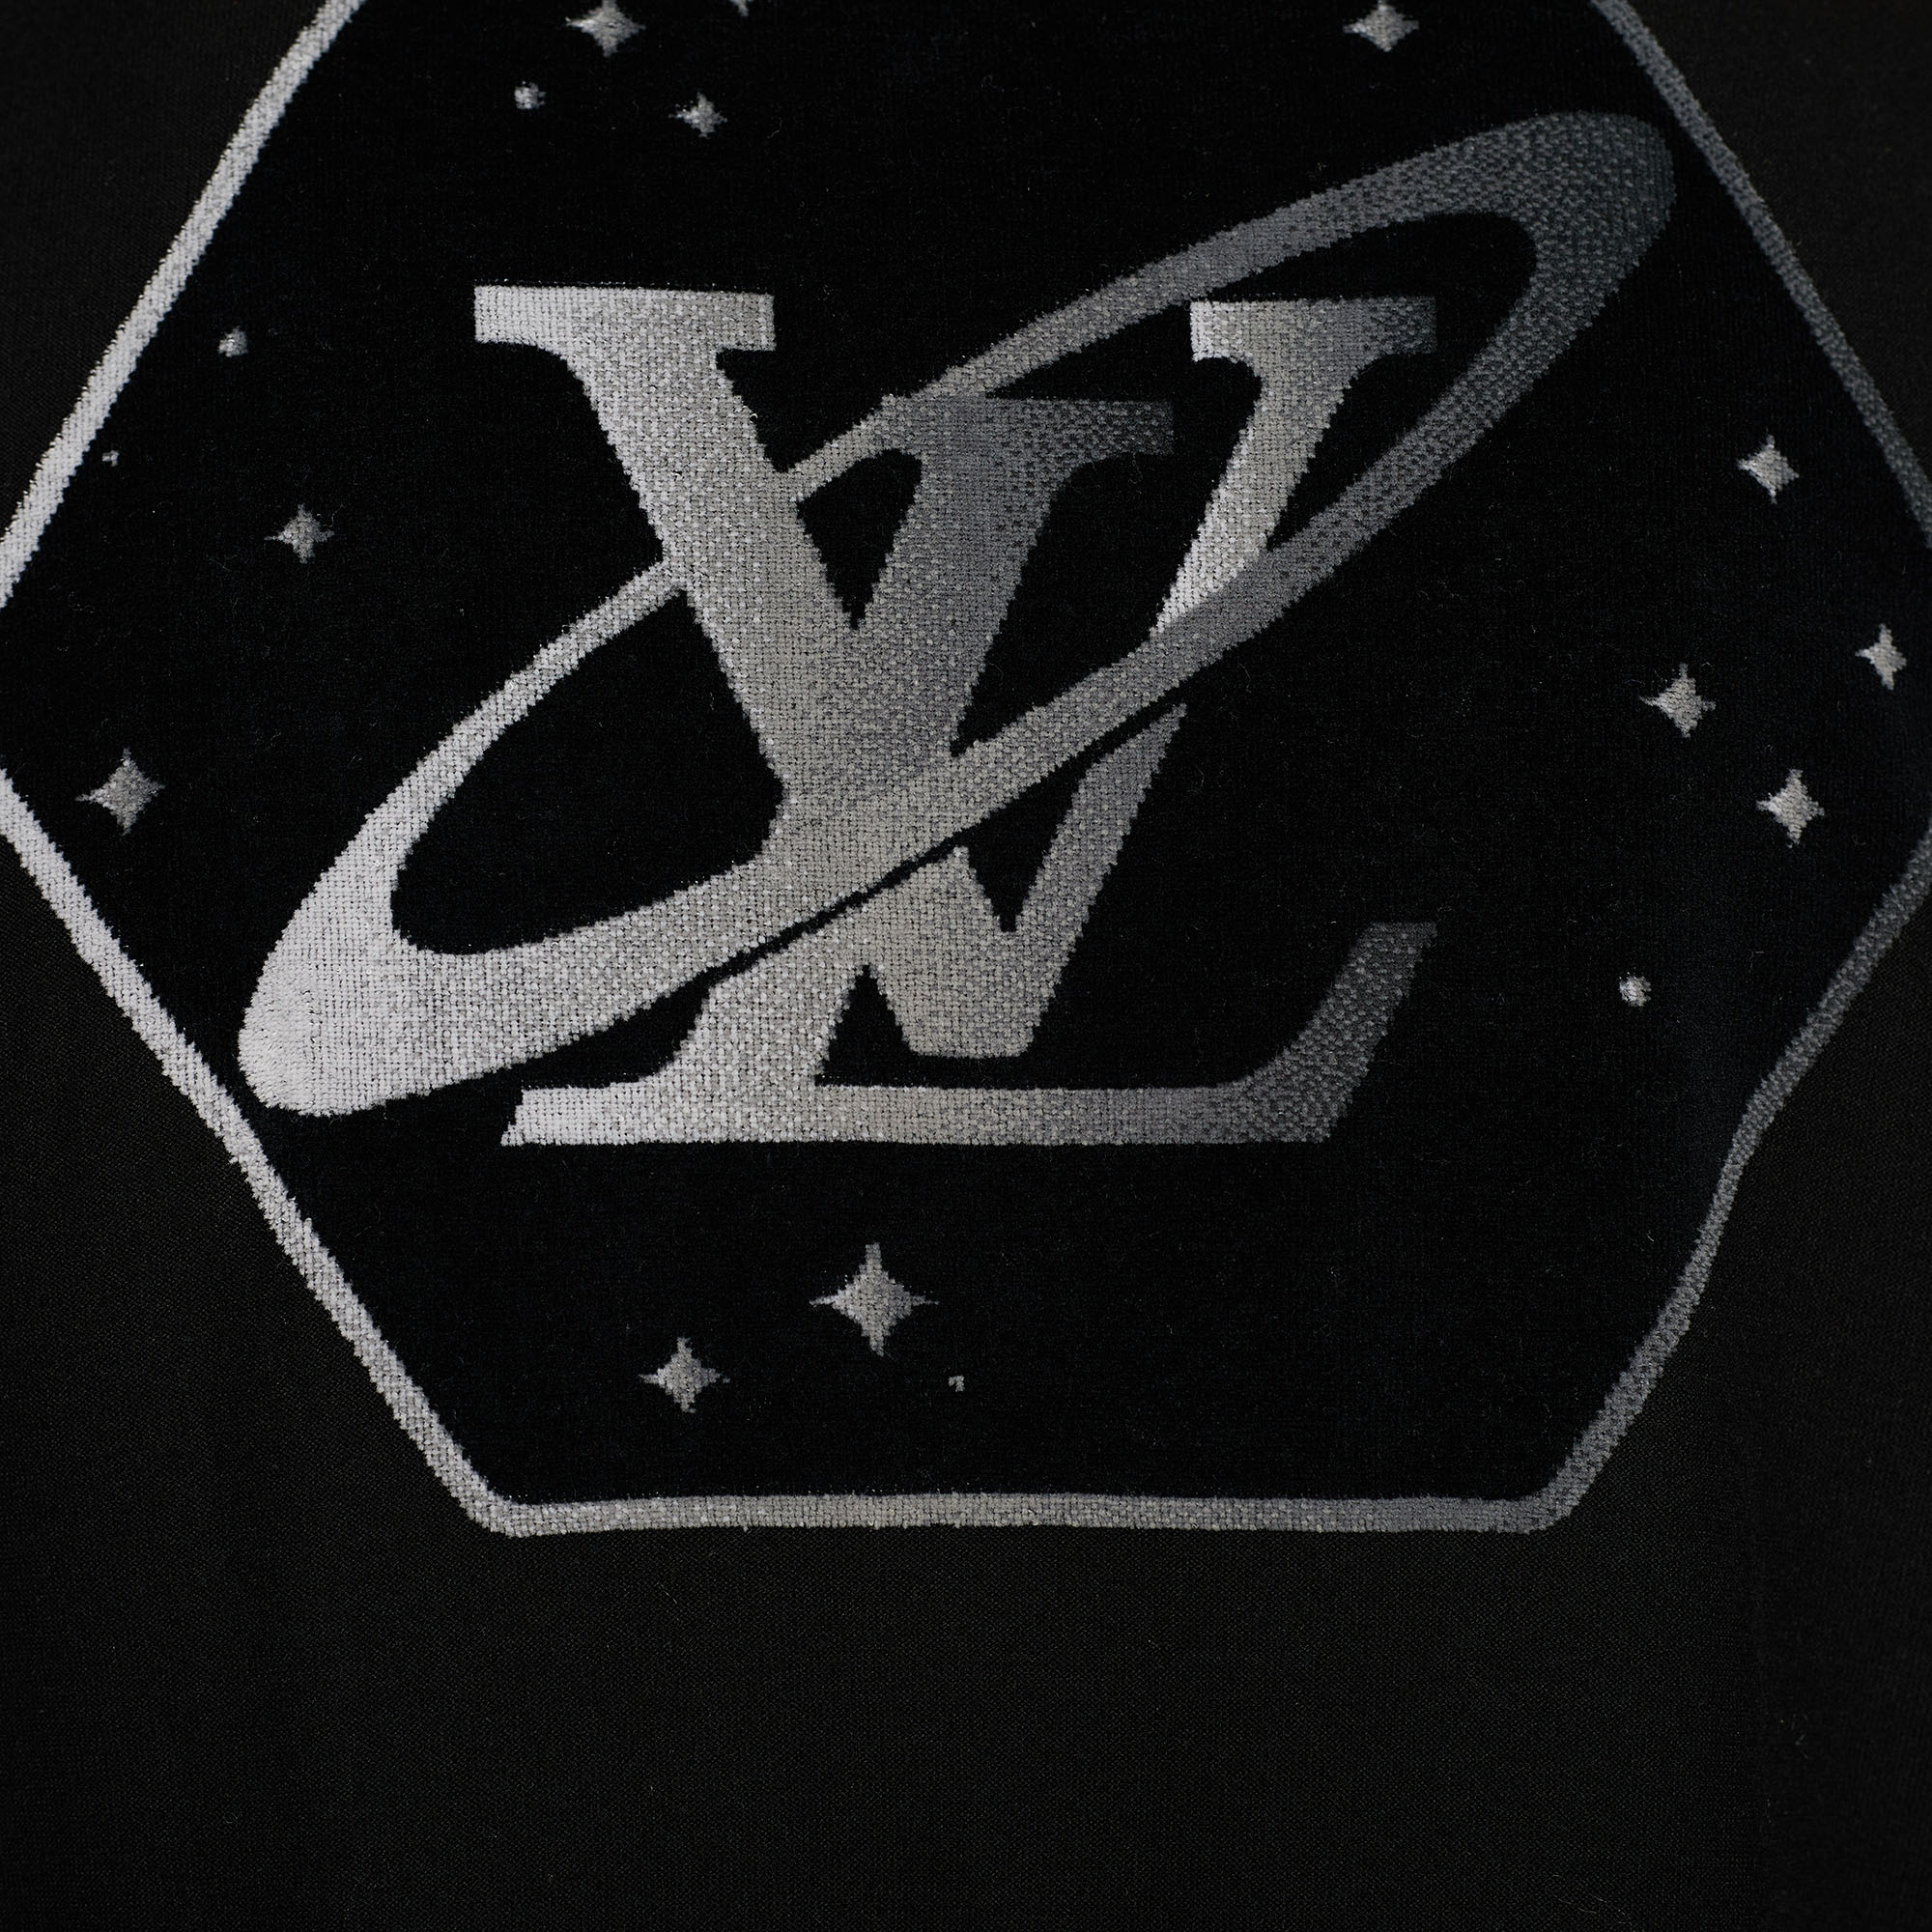 Louis Vuitton Cream Jacquard Velour Spaceman Motif Cotton T-Shirt XL